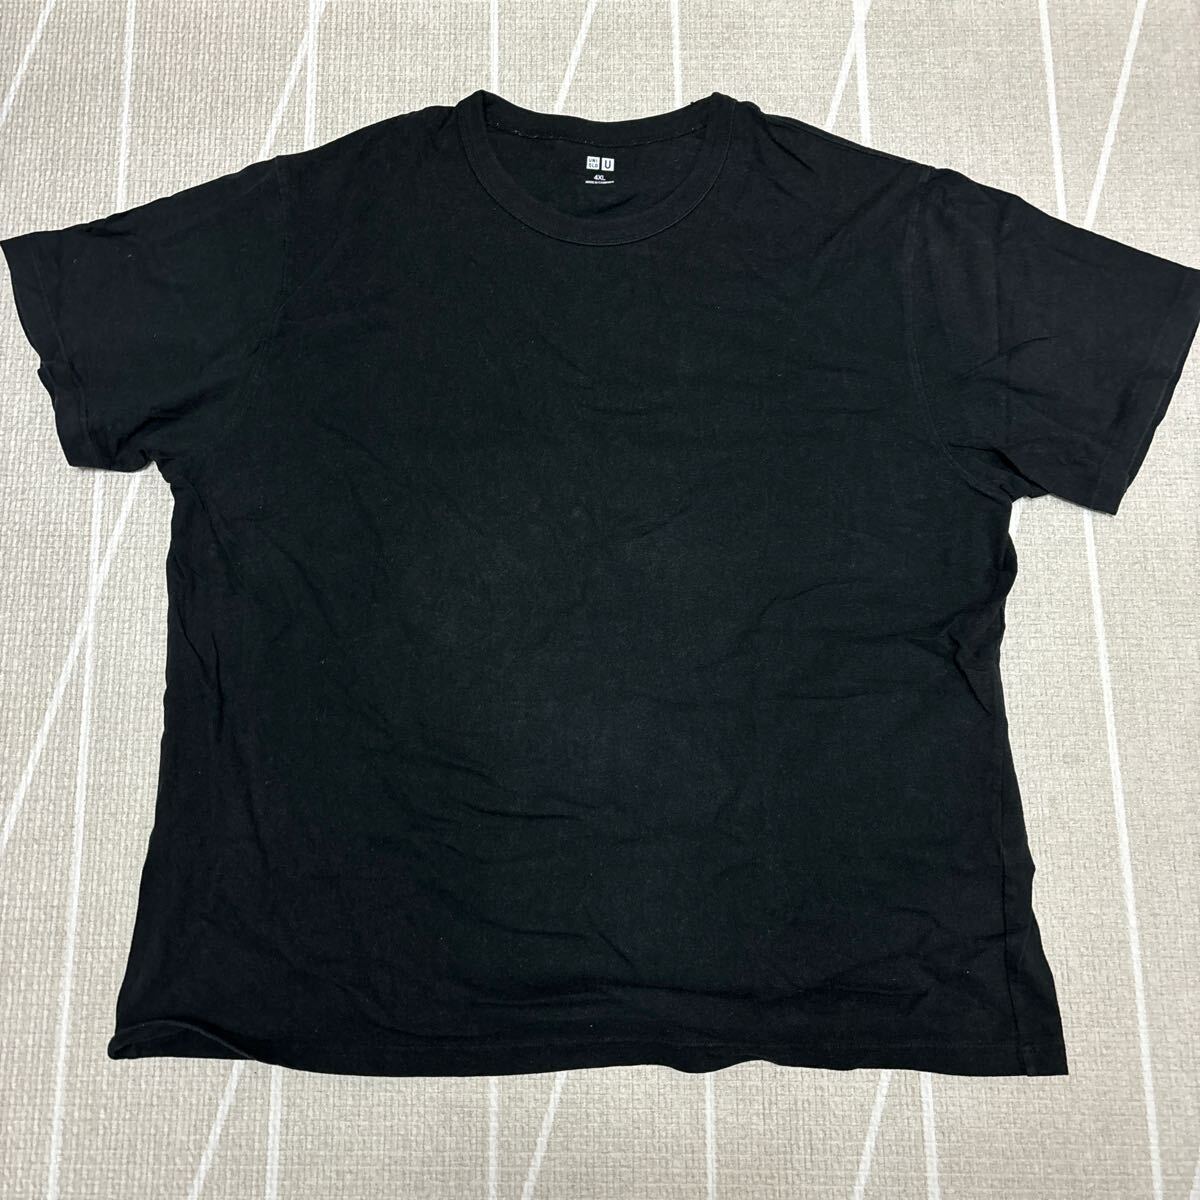 UNIQLO U ユニクロユー 無地半袖Tシャツ ブラック 黒 サイズ4XLの画像1